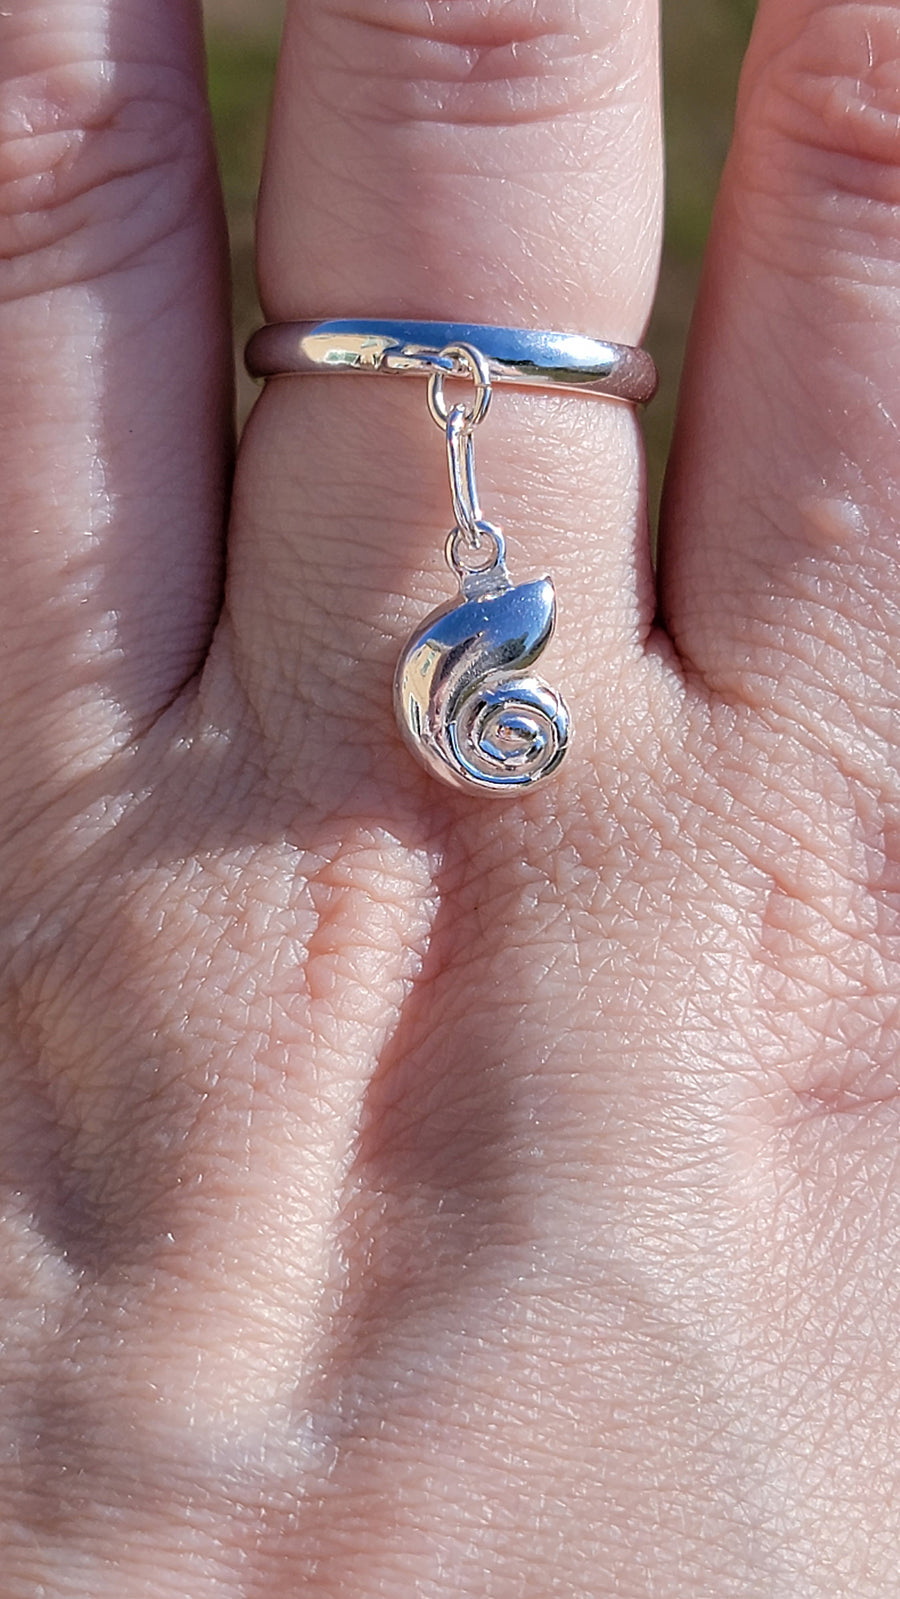 Sterling Silver Seashell Charm Handmade Ring